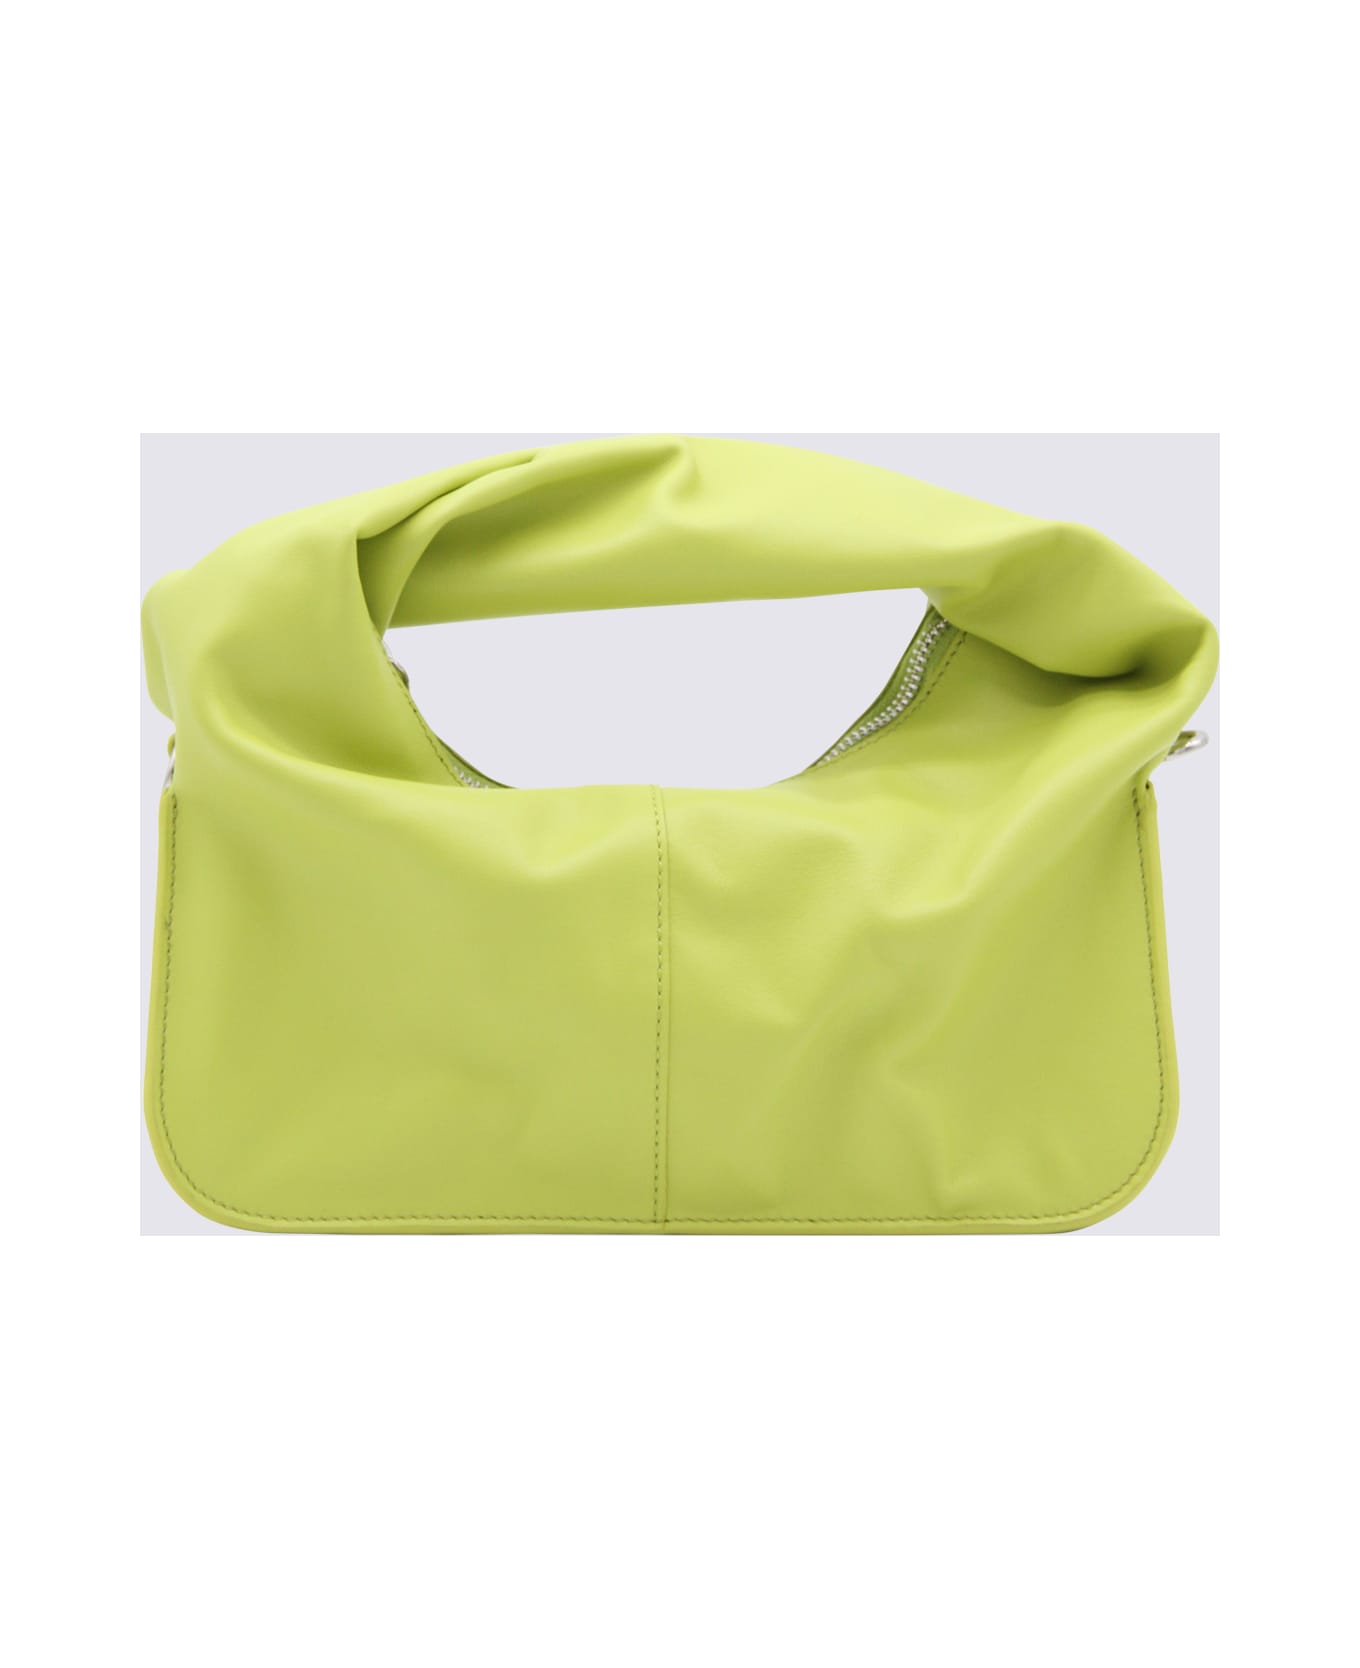 YUZEFI Leather Anise Wonton Handle Bag - Green